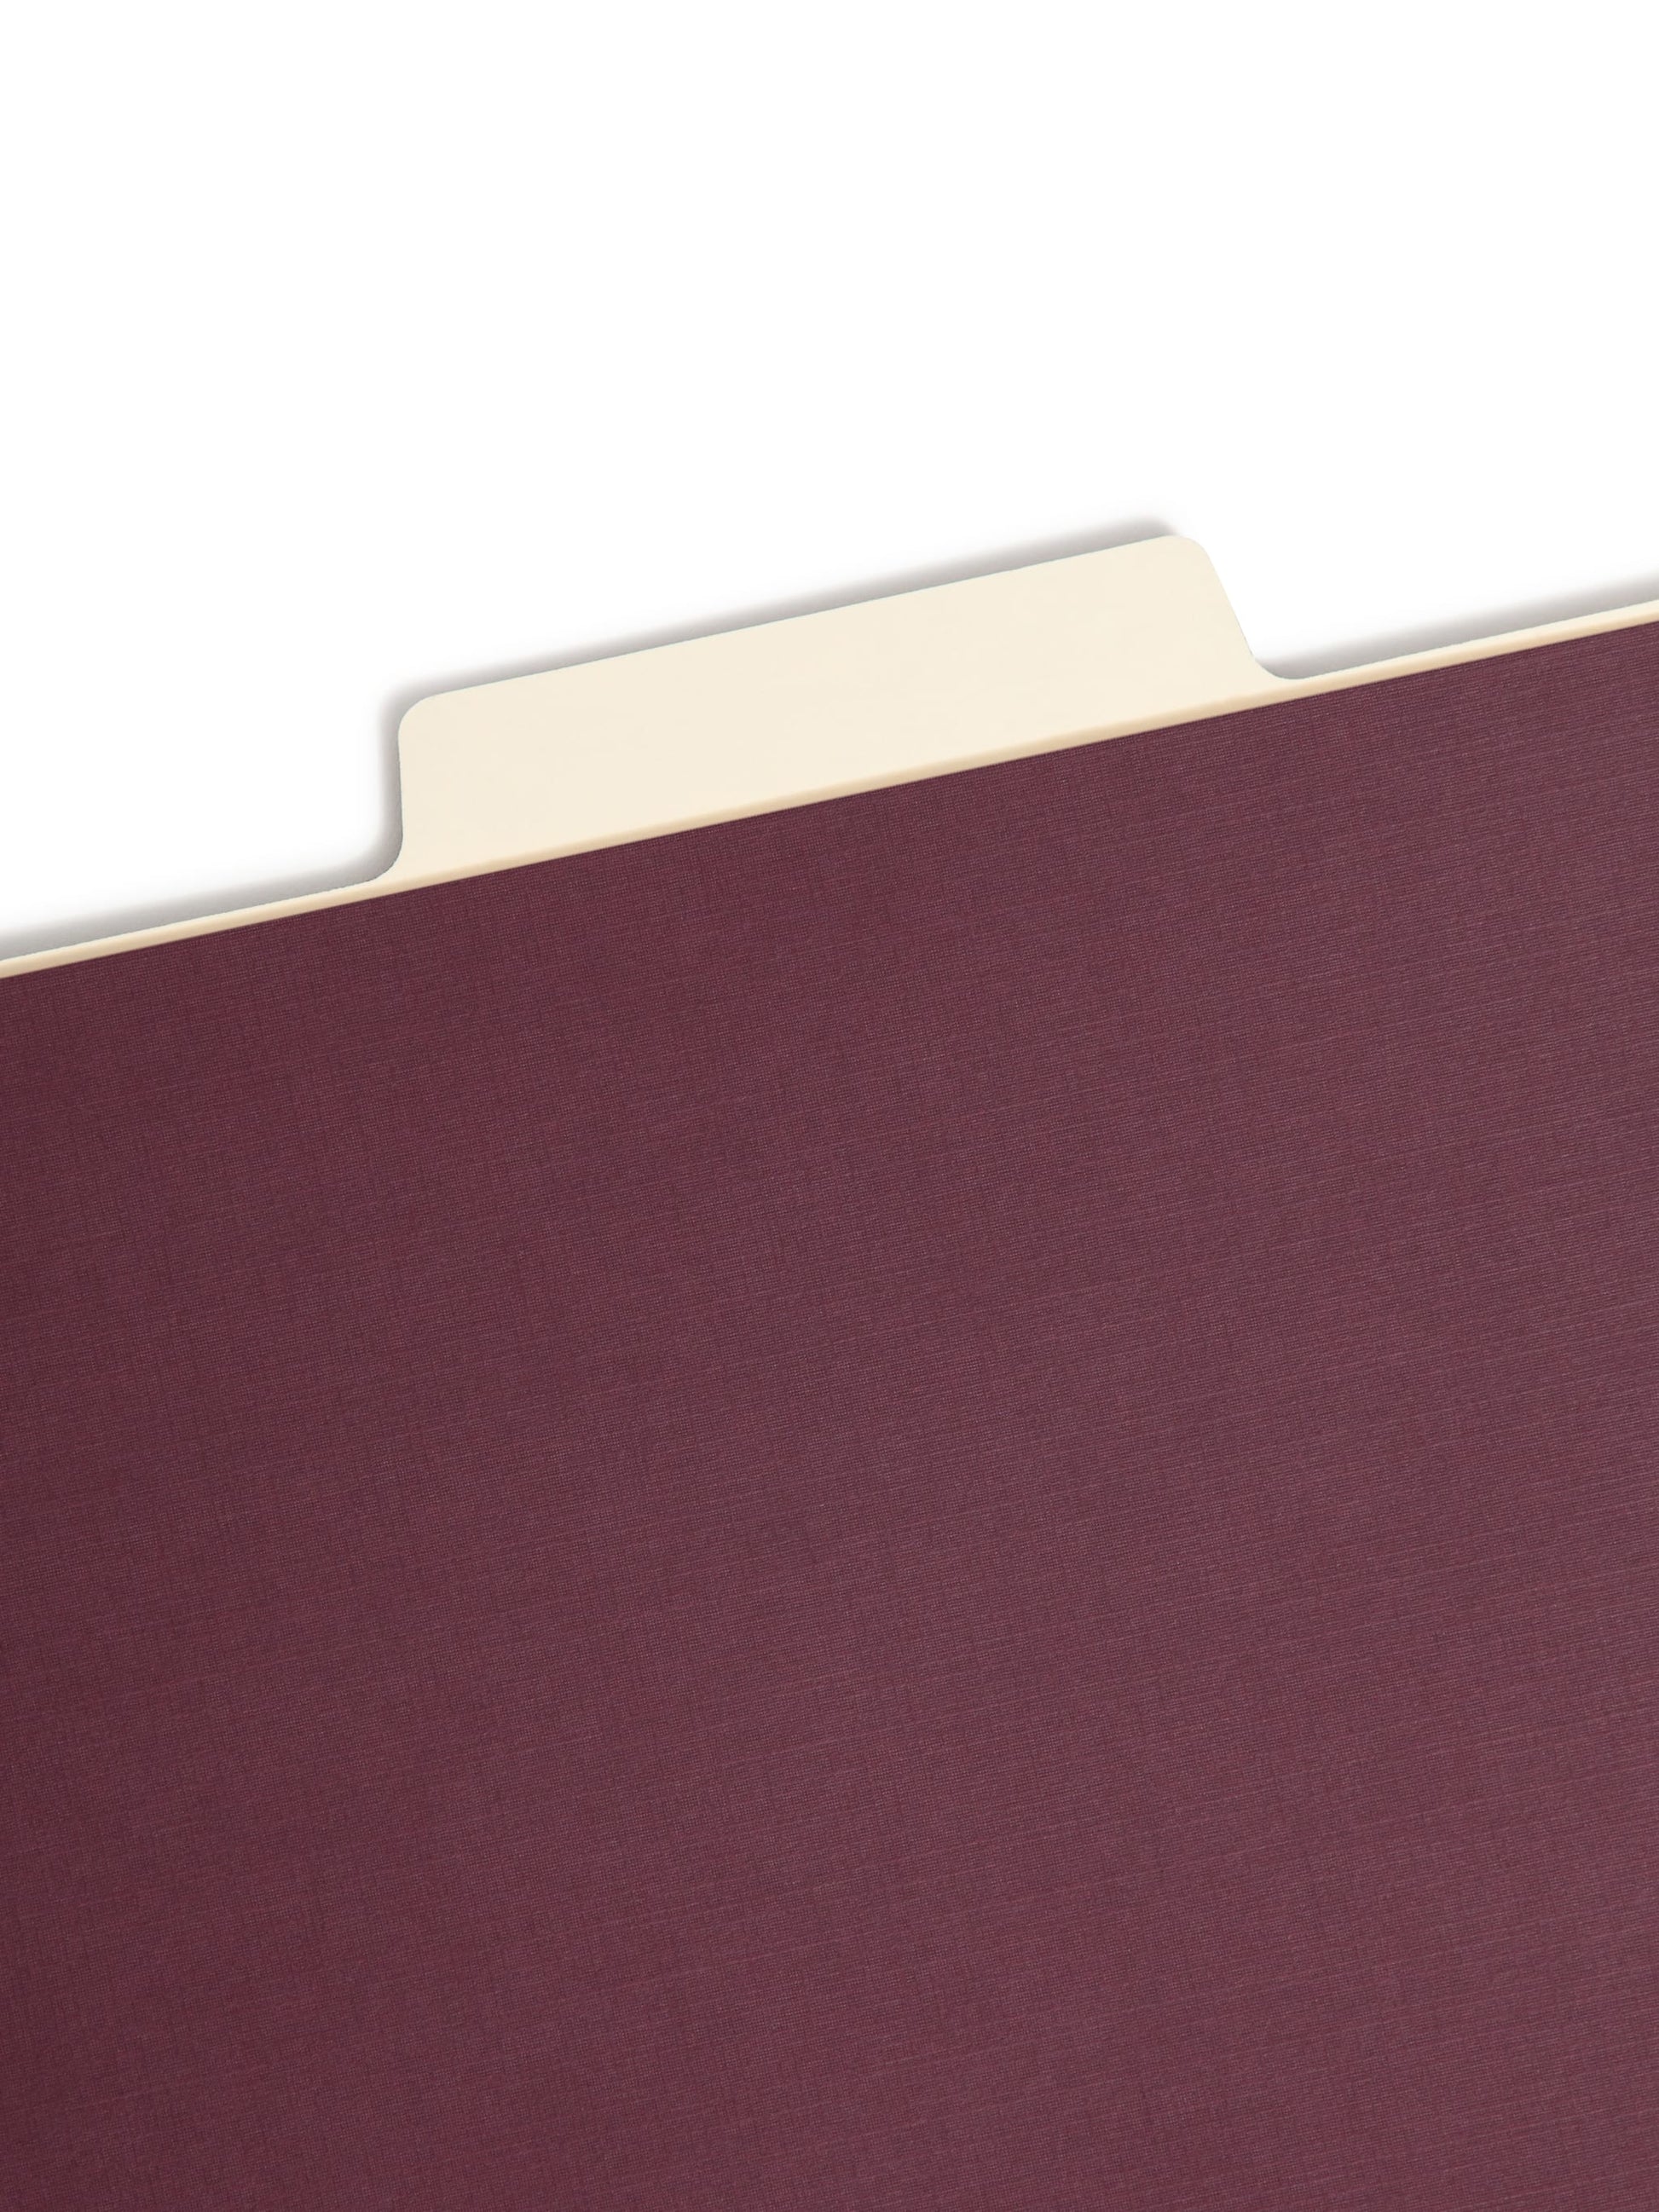 SuperTab® Classification File Folders, Maroon Color, Letter Size, 